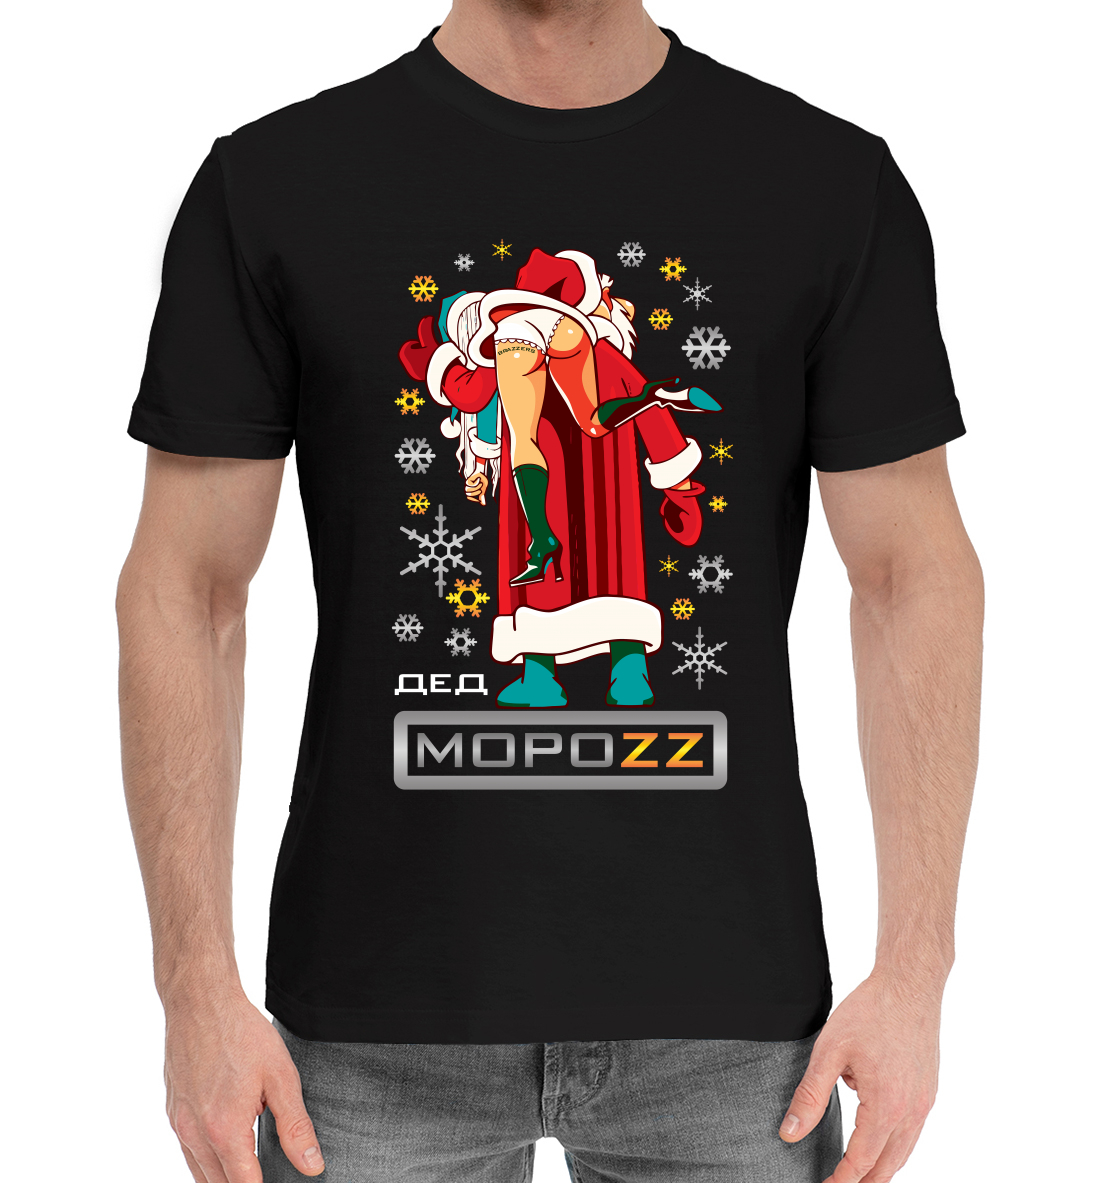 Мужская Хлопковая футболка с принтом Дед Мороз Brazzers, артикул DMZ-572264-hfu-2mp